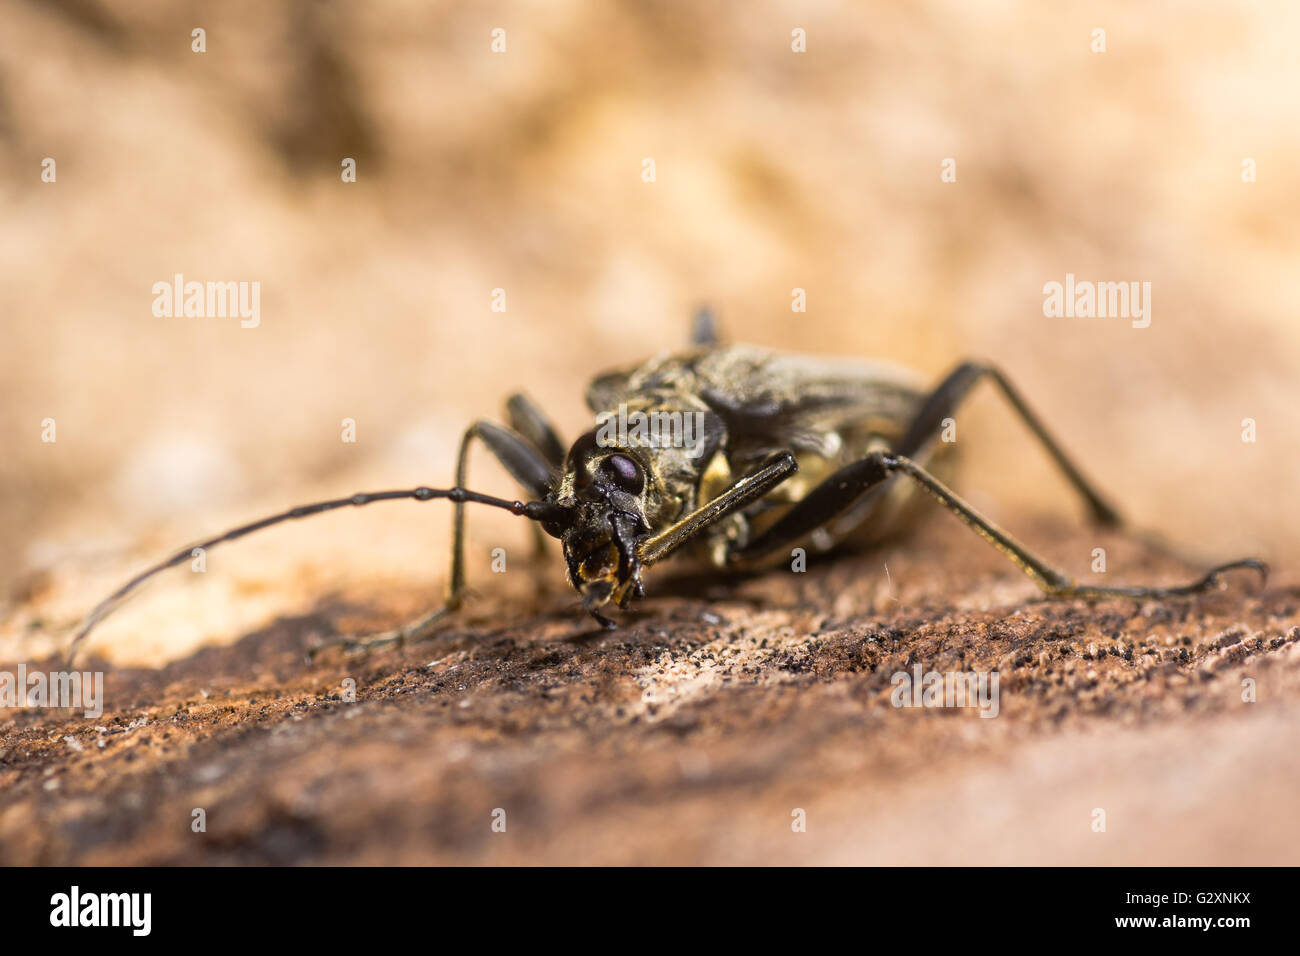 Stenocorus meridianus longhorn beetle in family Cerambycidae, the longhorns or longicorn beetles, cleaning leg with mandibles Stock Photo